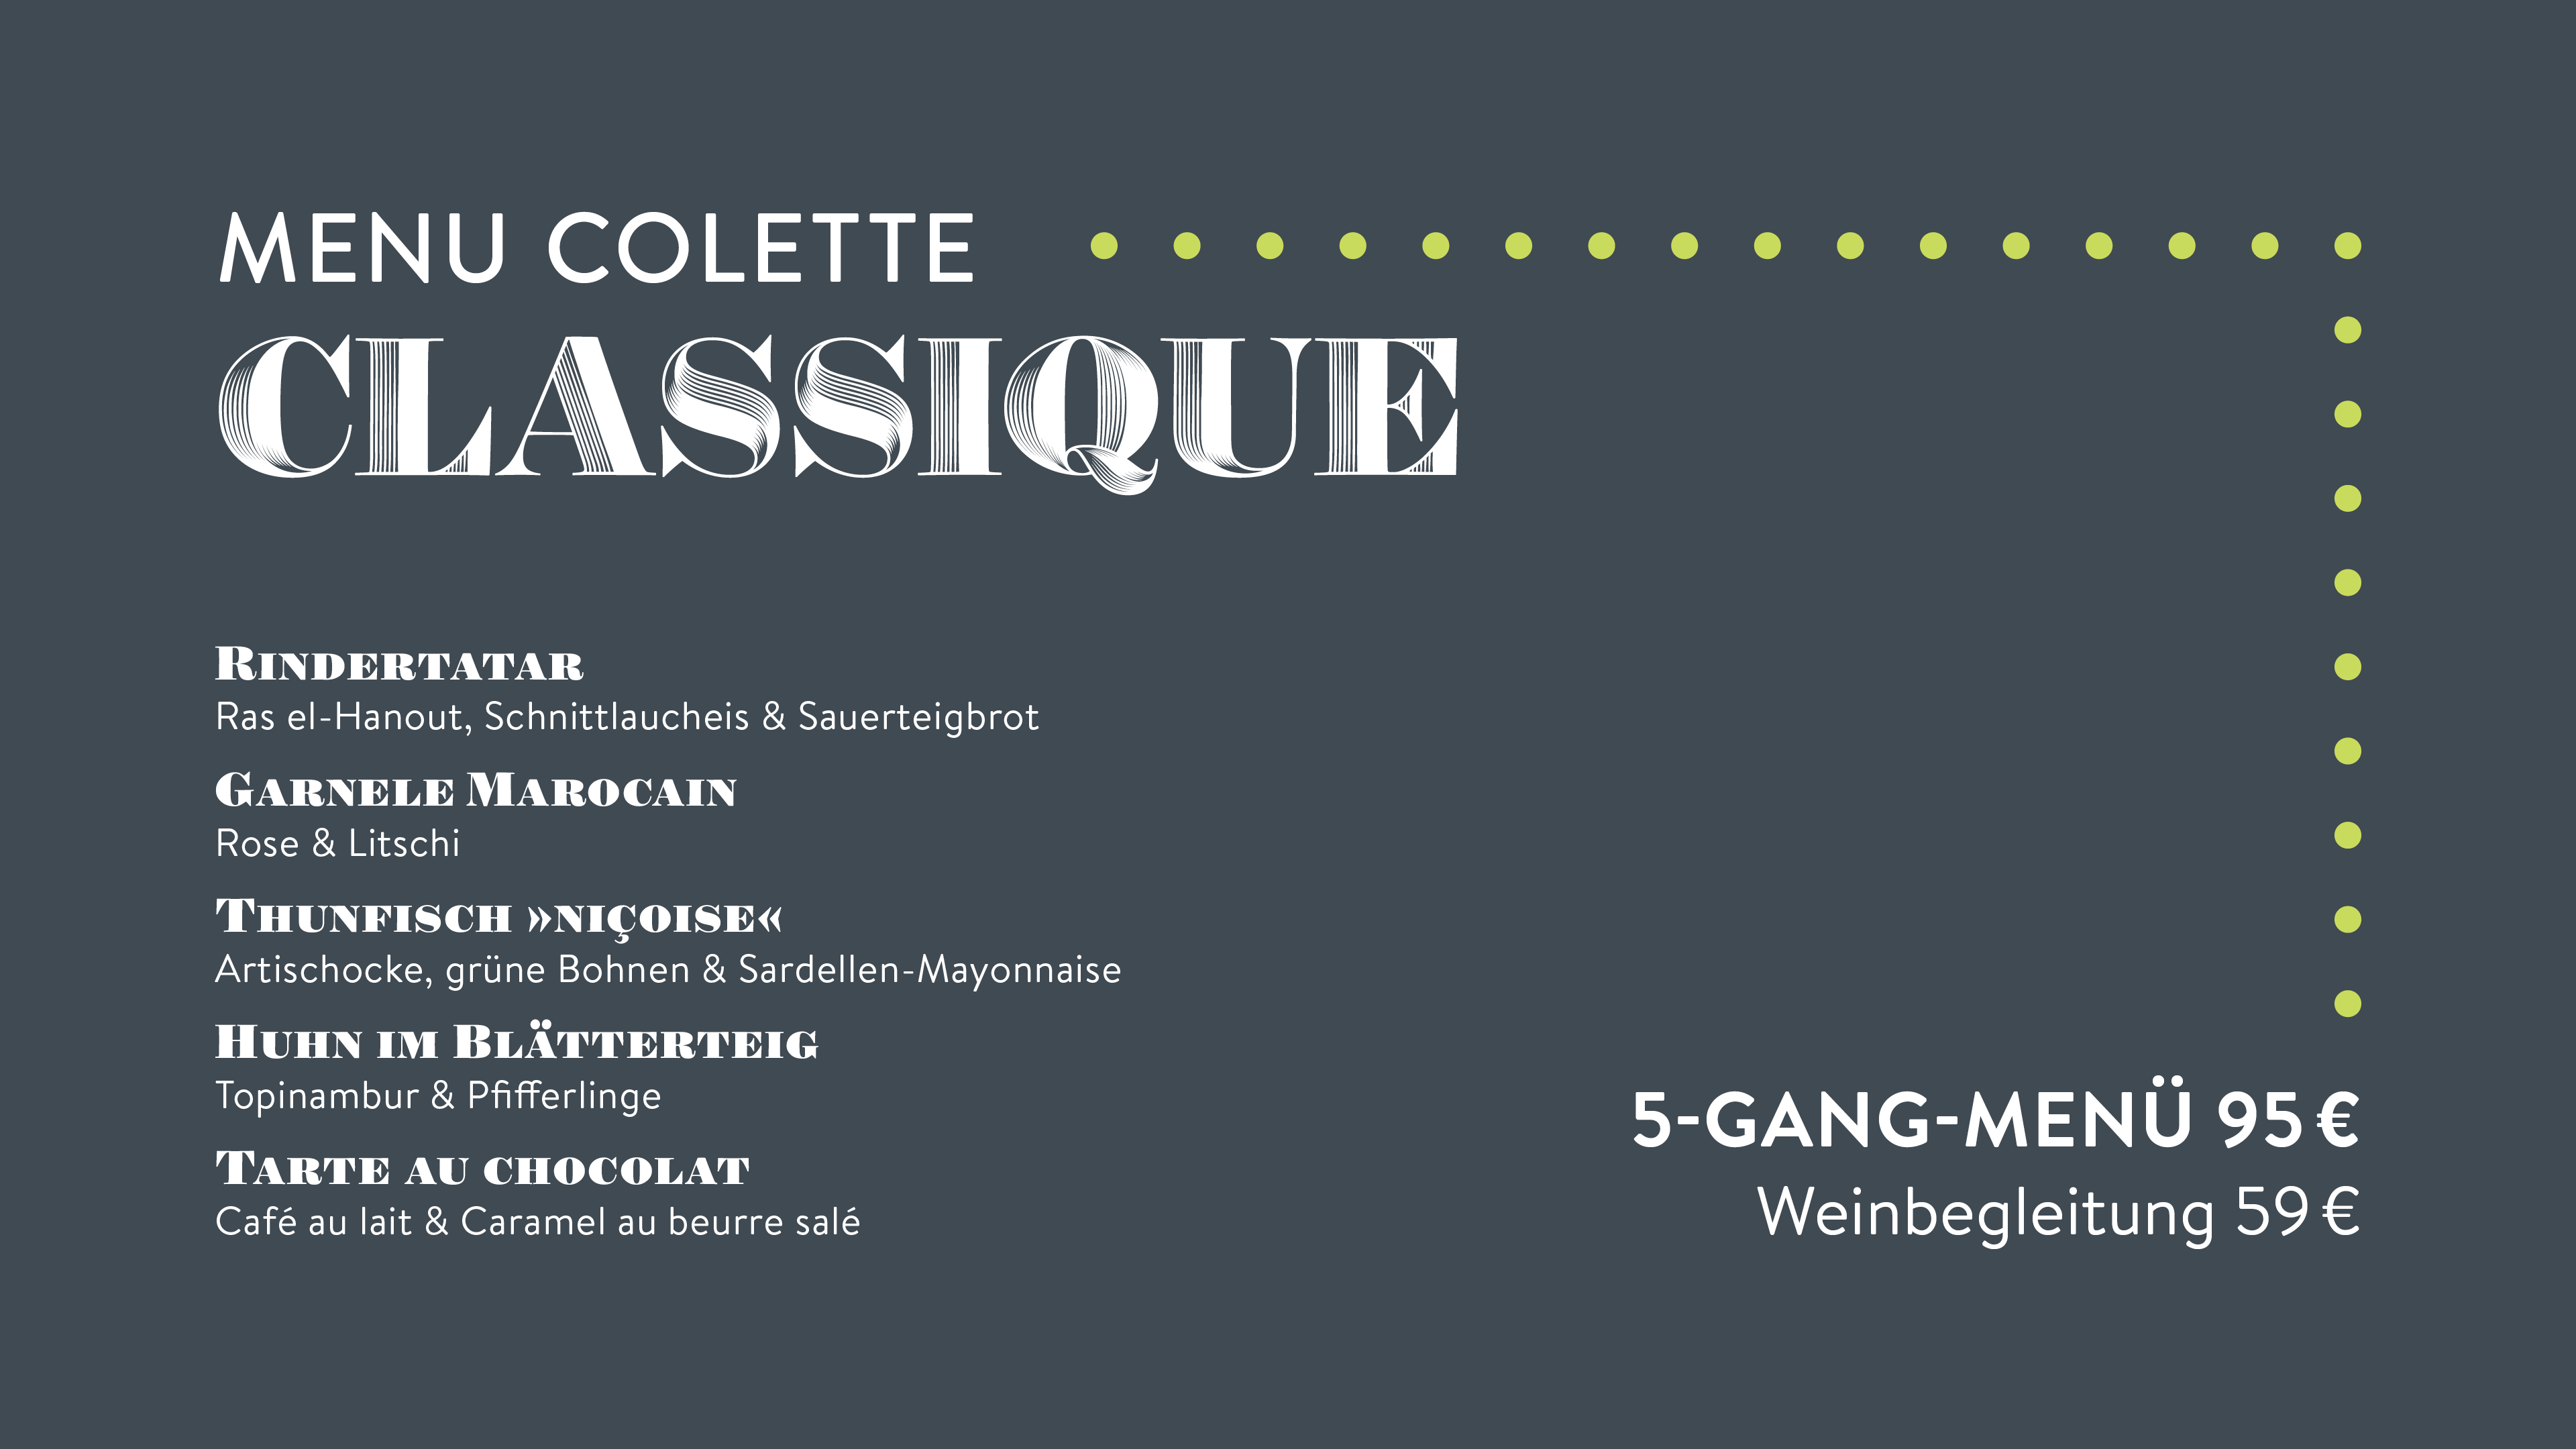 Speisekarte Menu Colette Classique 5-Gang-Menü